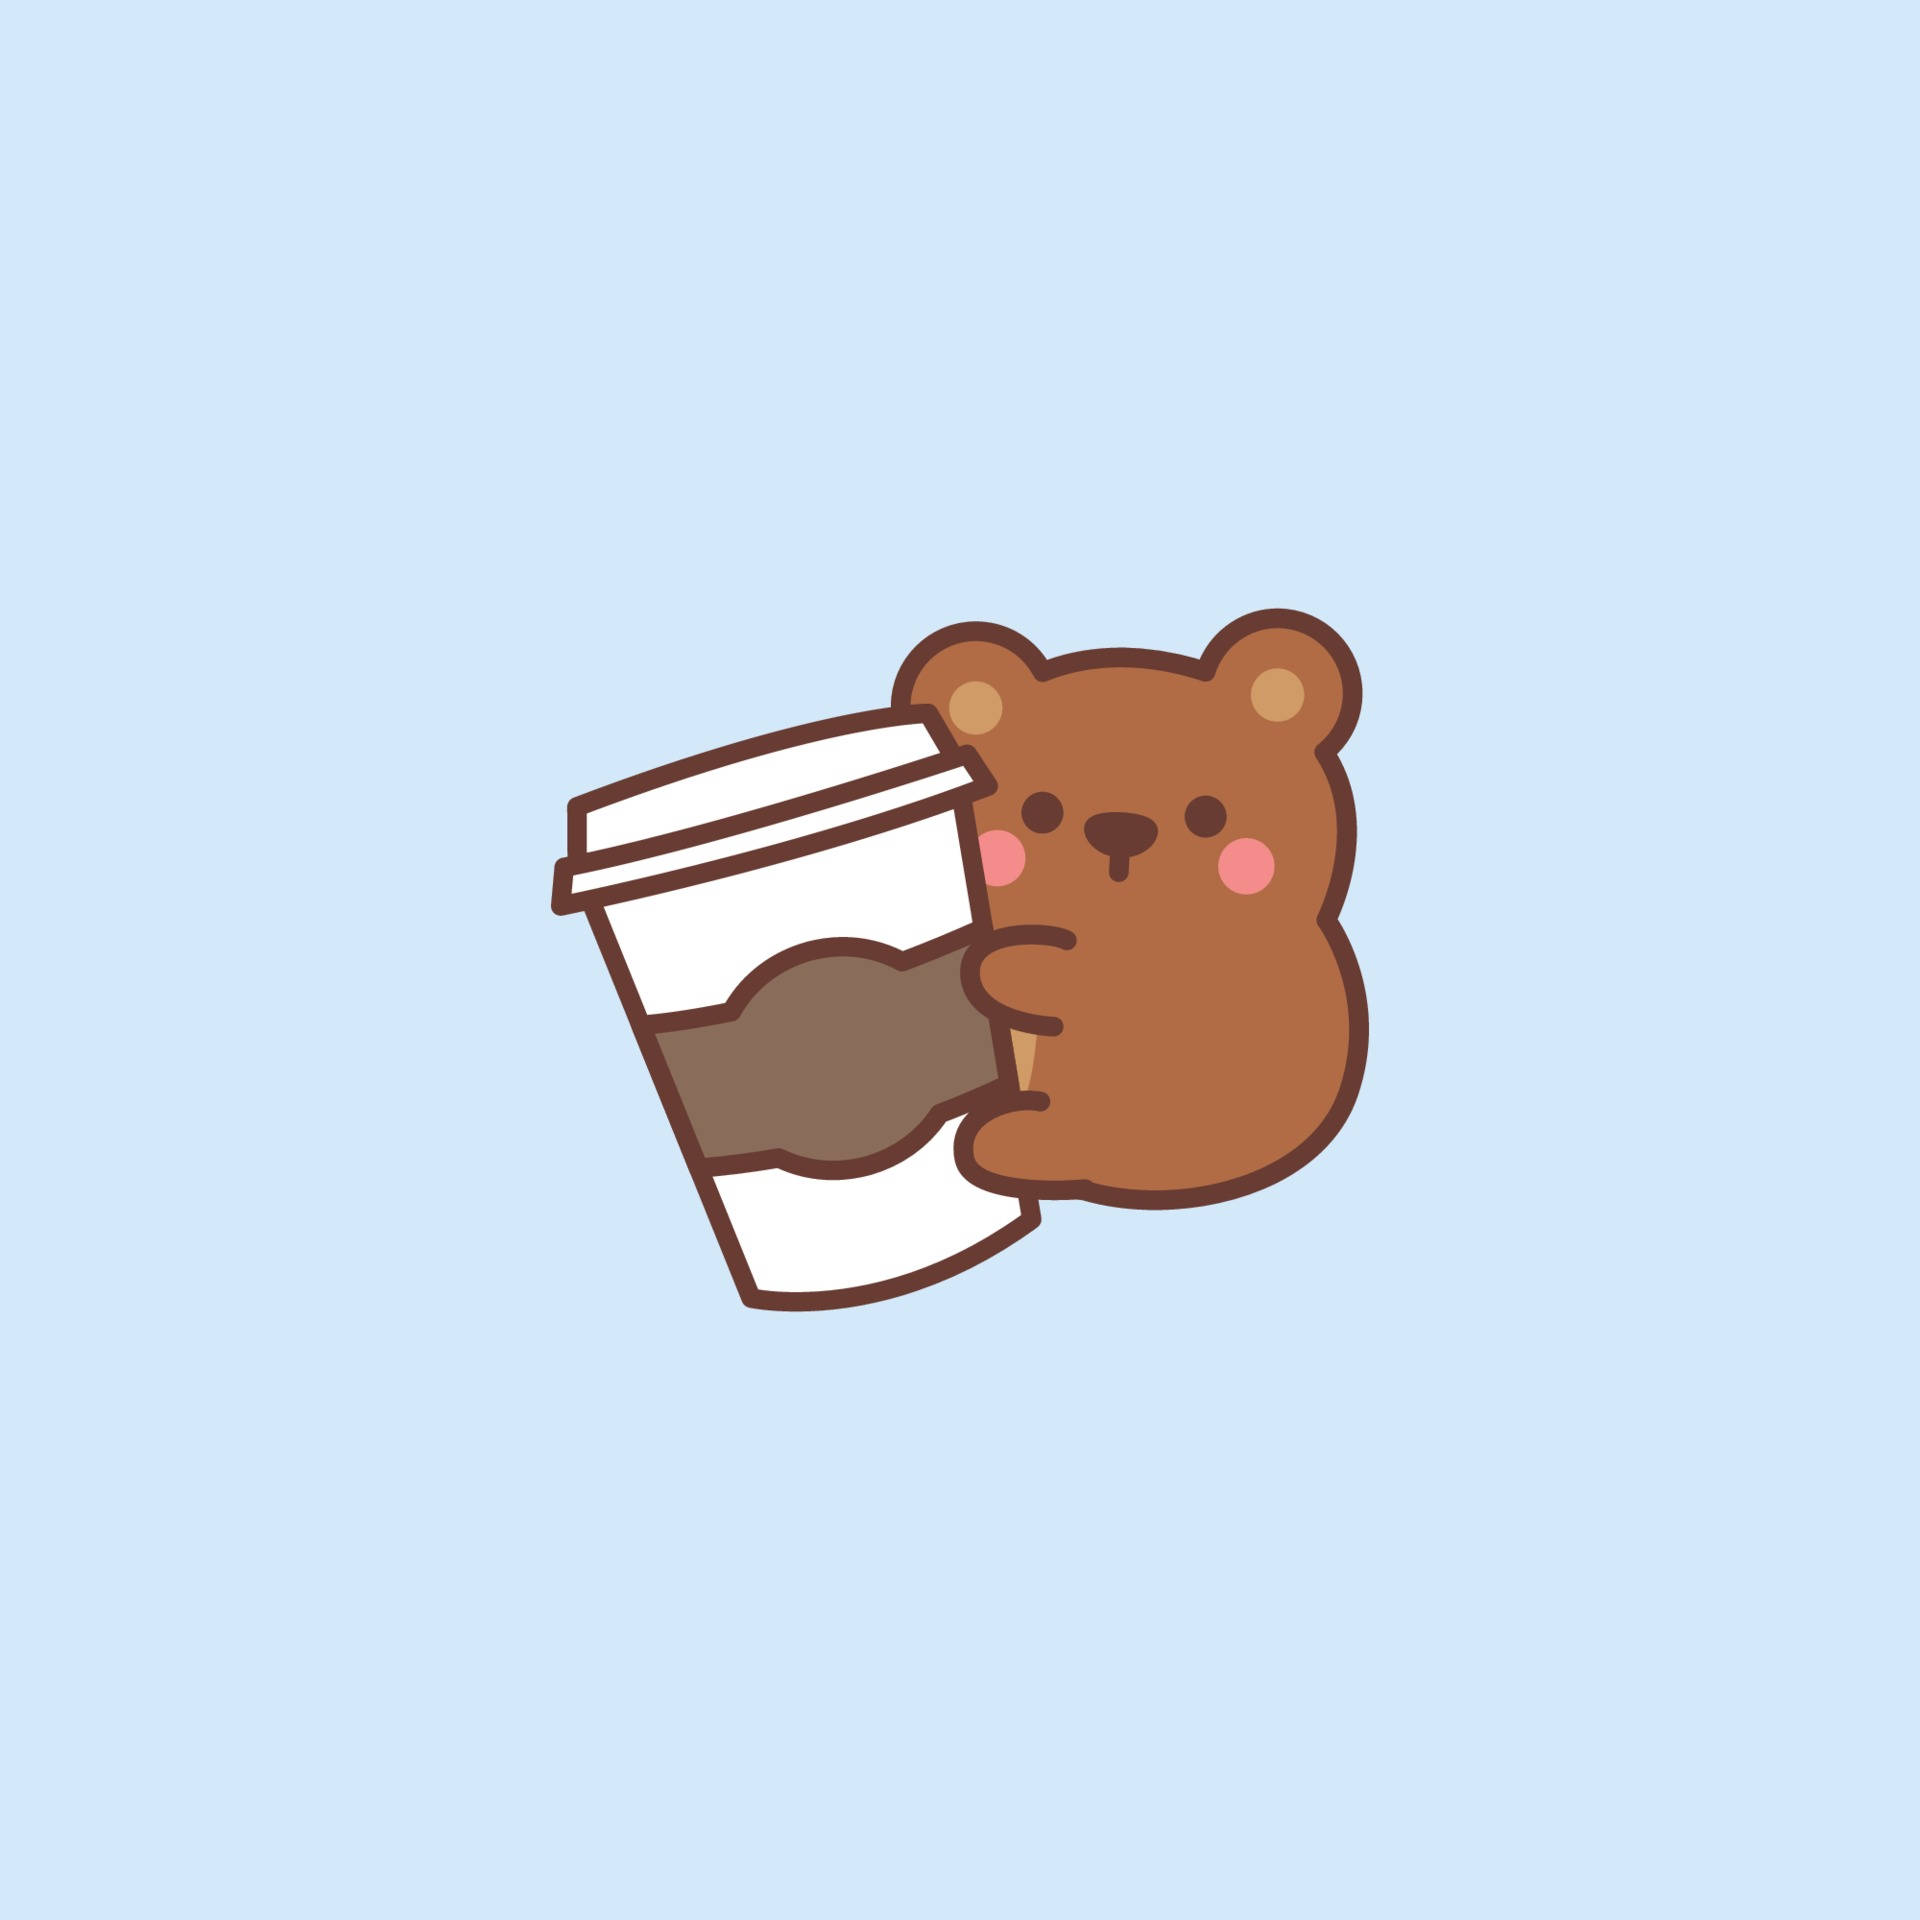 https://wallpapers.com/images/hd/cute-pfp-bear-with-coffee-cup-ben0b5qg8rmcxeao.jpg